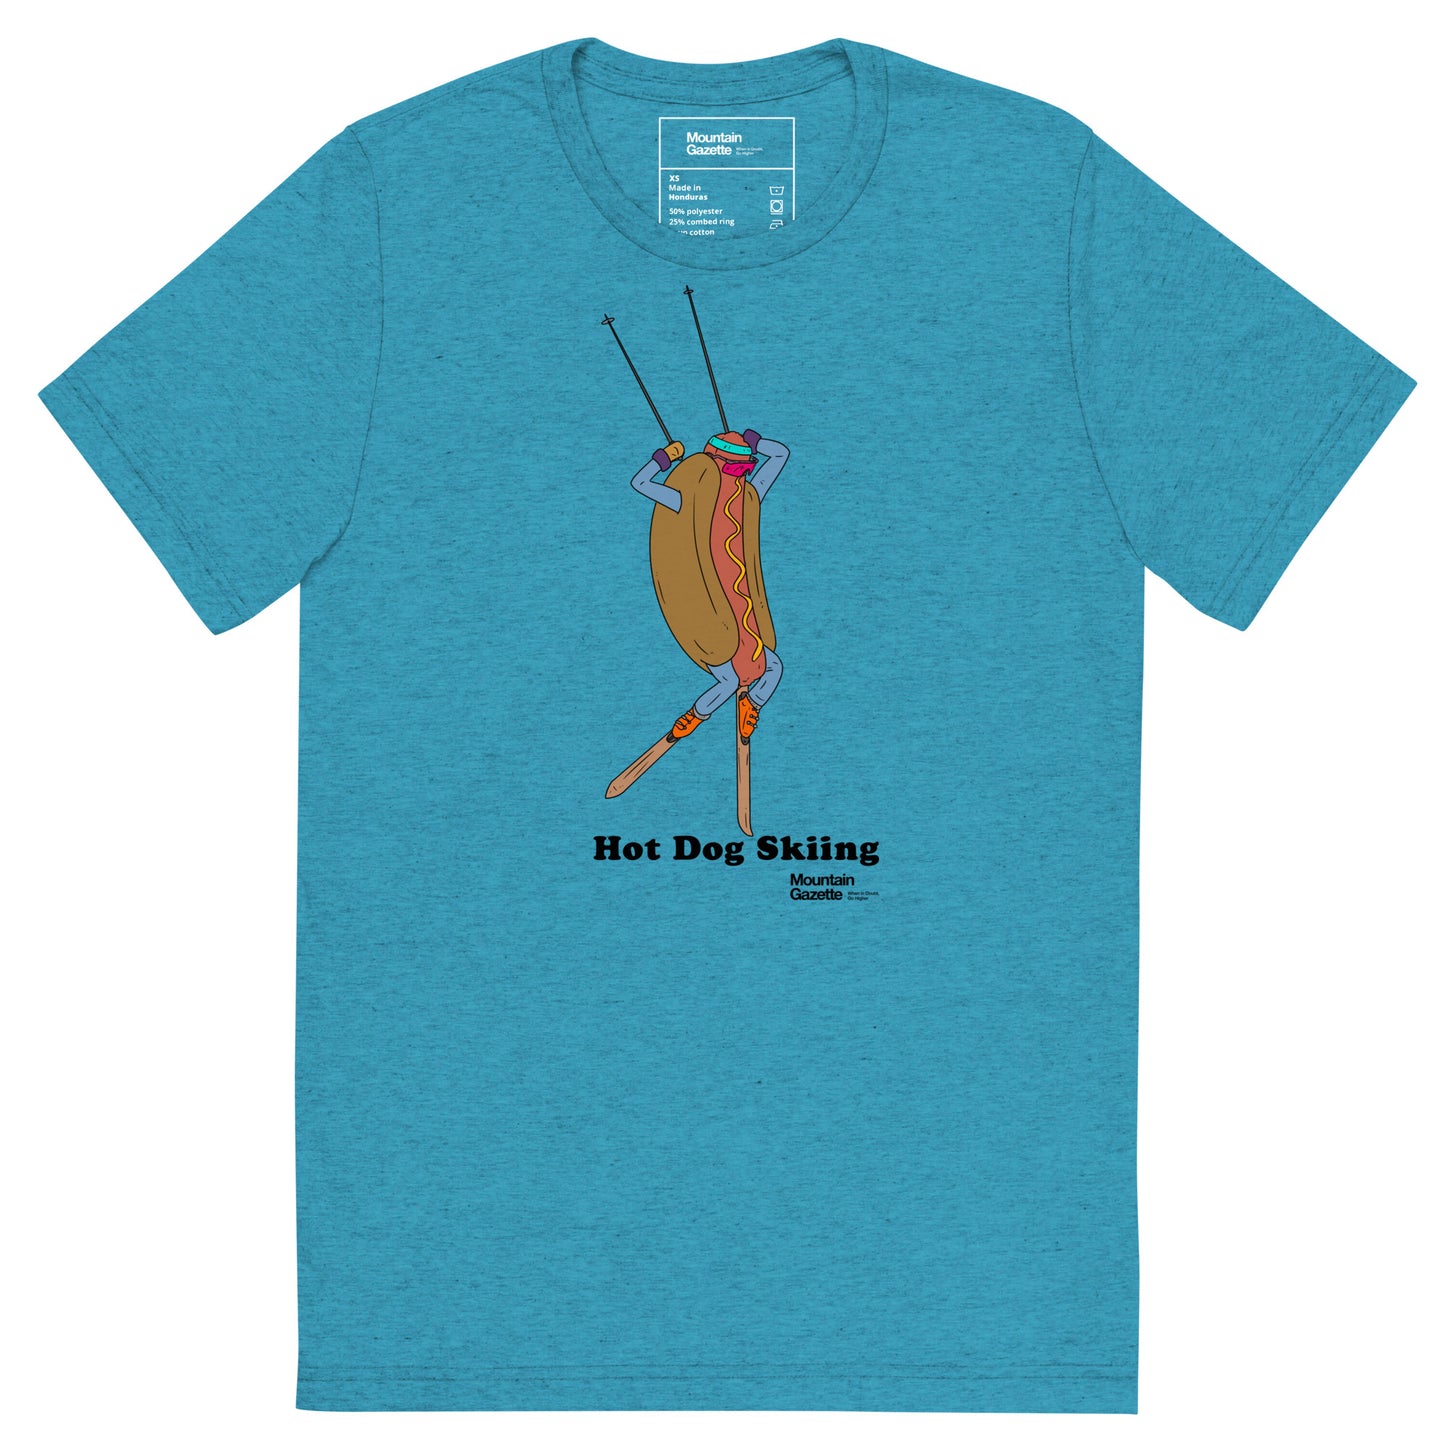 Hot Dog Skiing T-shirt